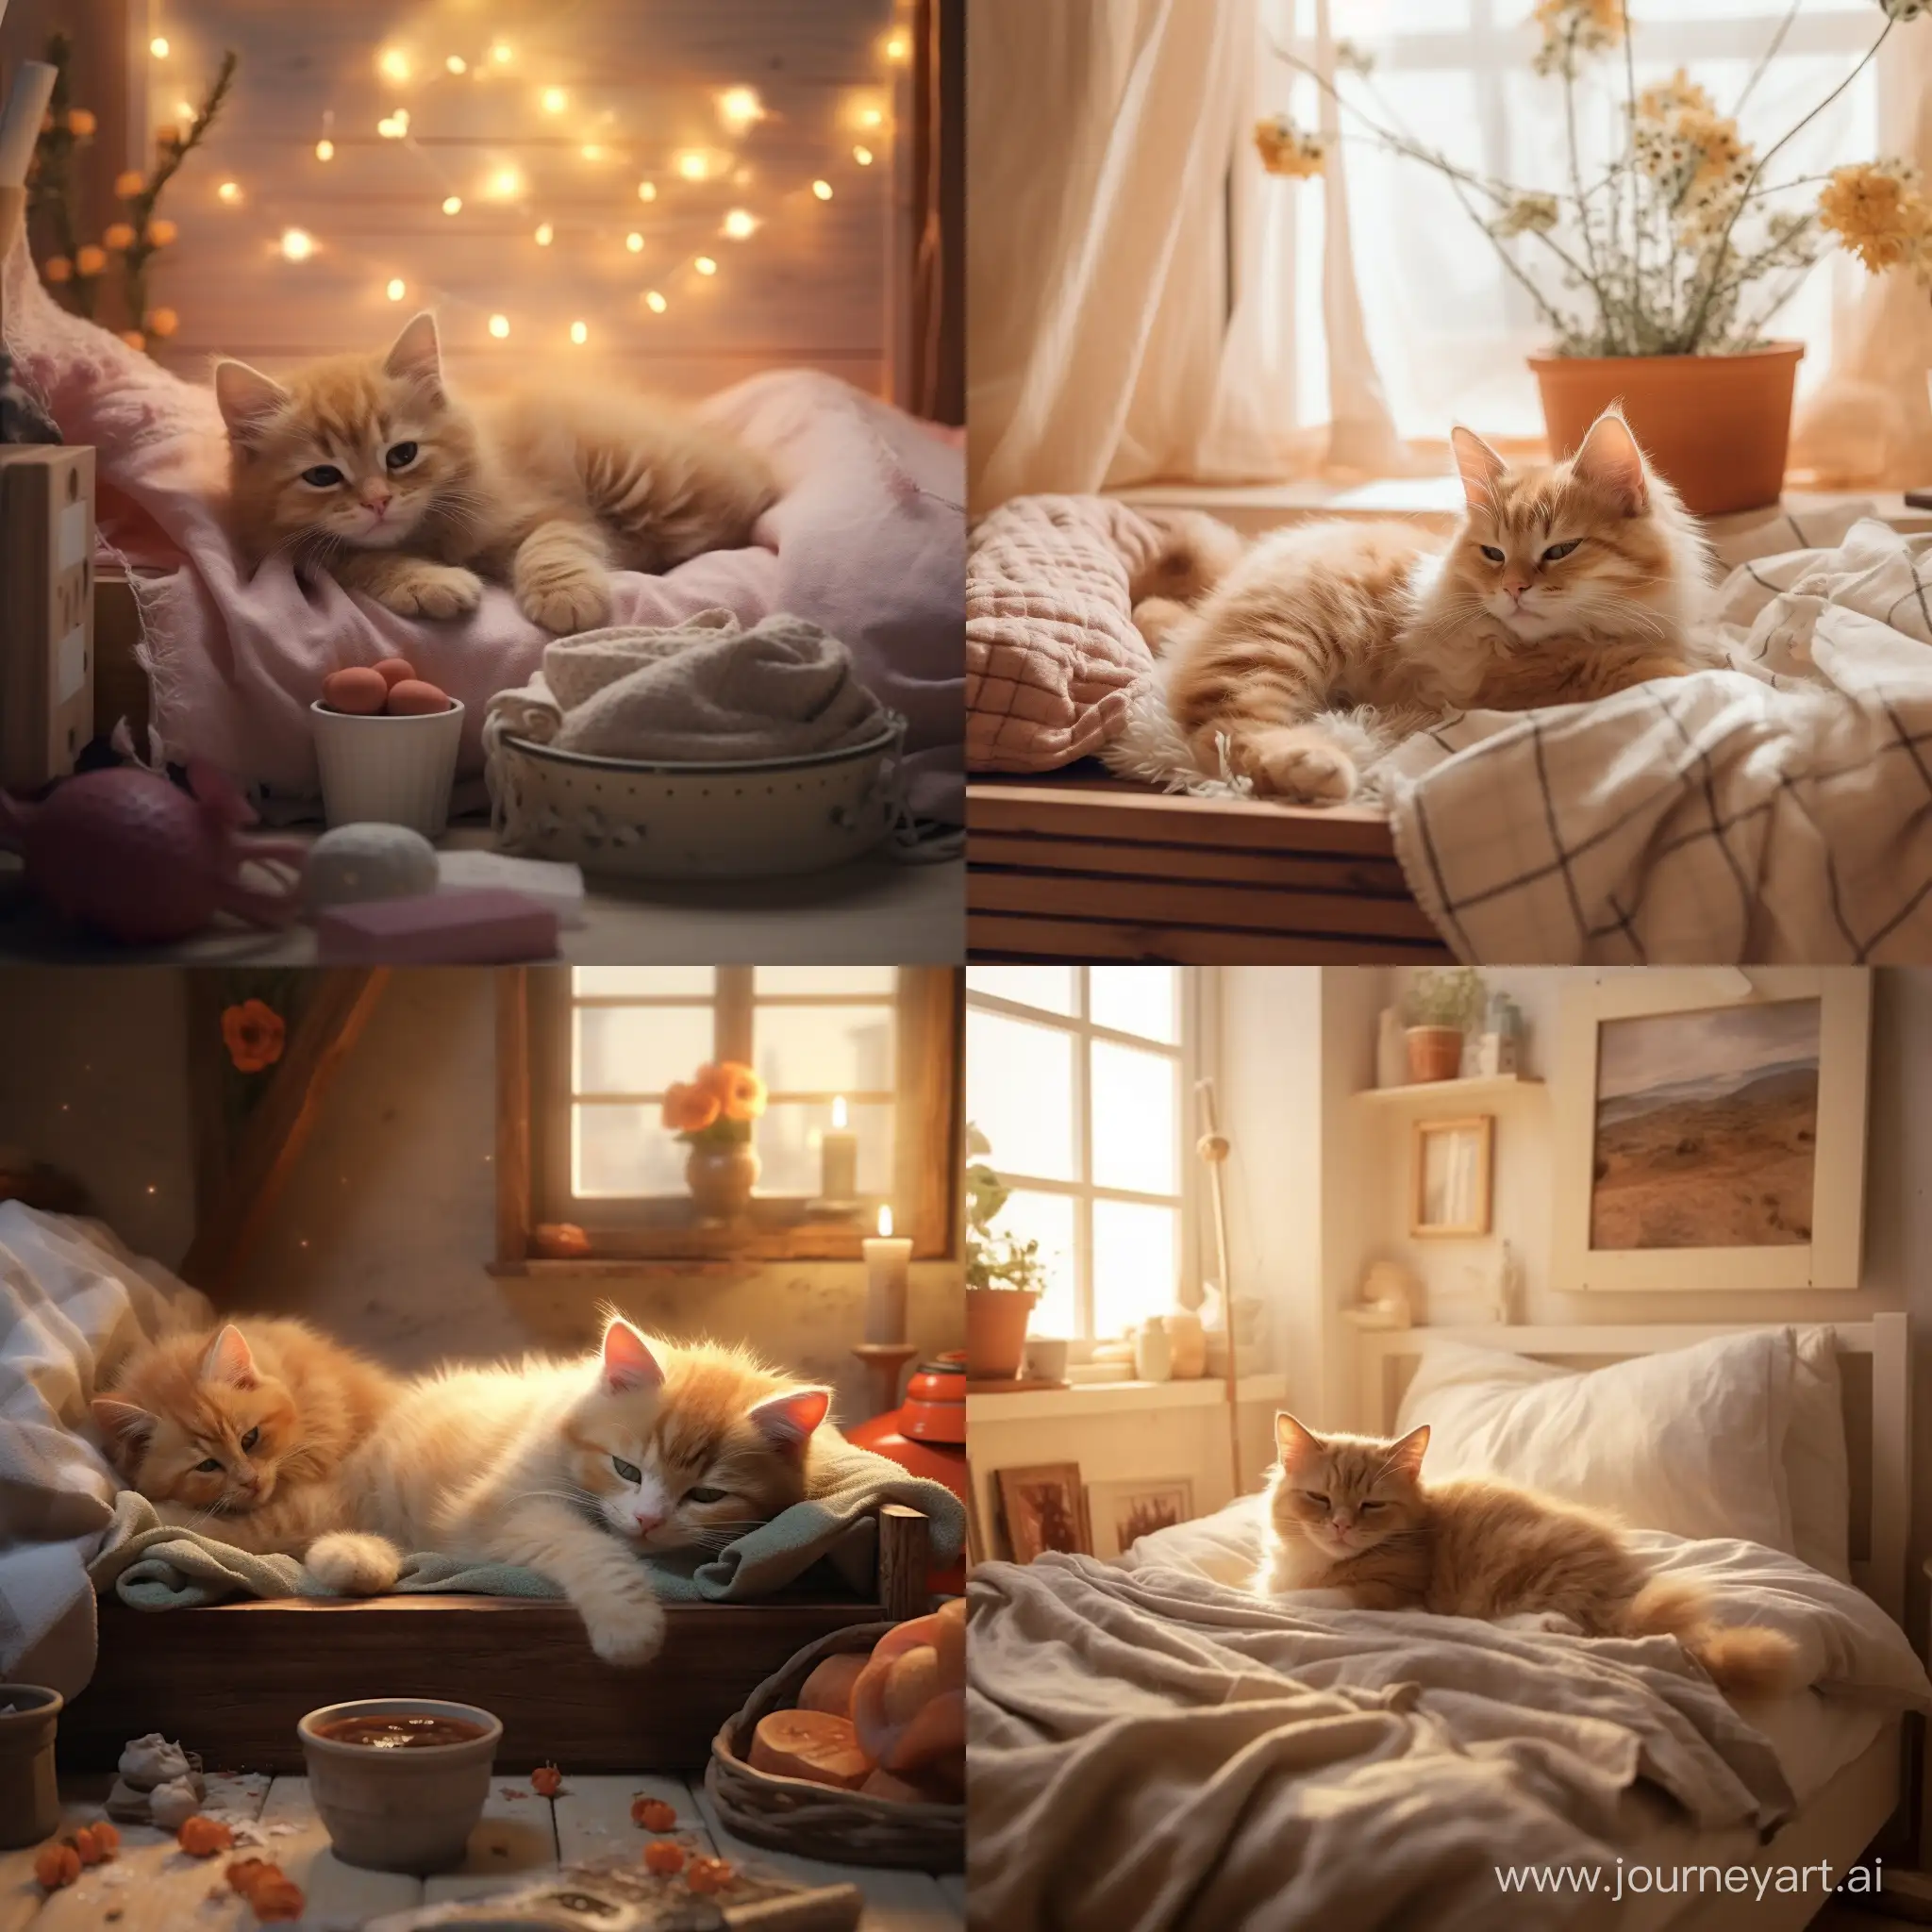 Adorable-Kitten-Blissfully-Sleeping-in-a-Cozy-Bedroom